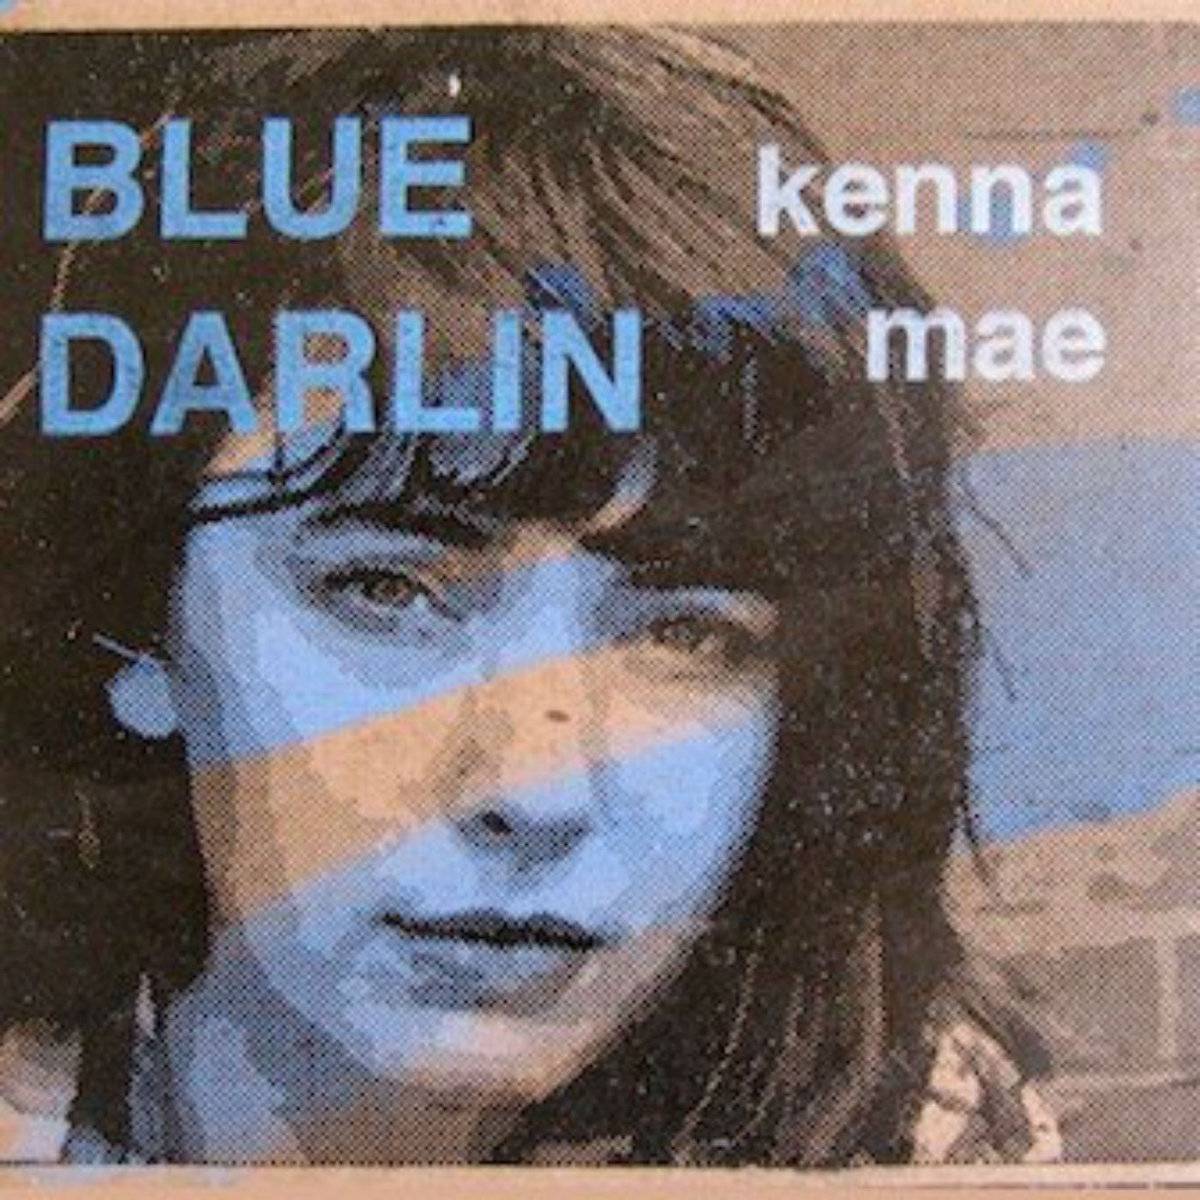 Blue Darlin a solid introduction for Kenna Mae